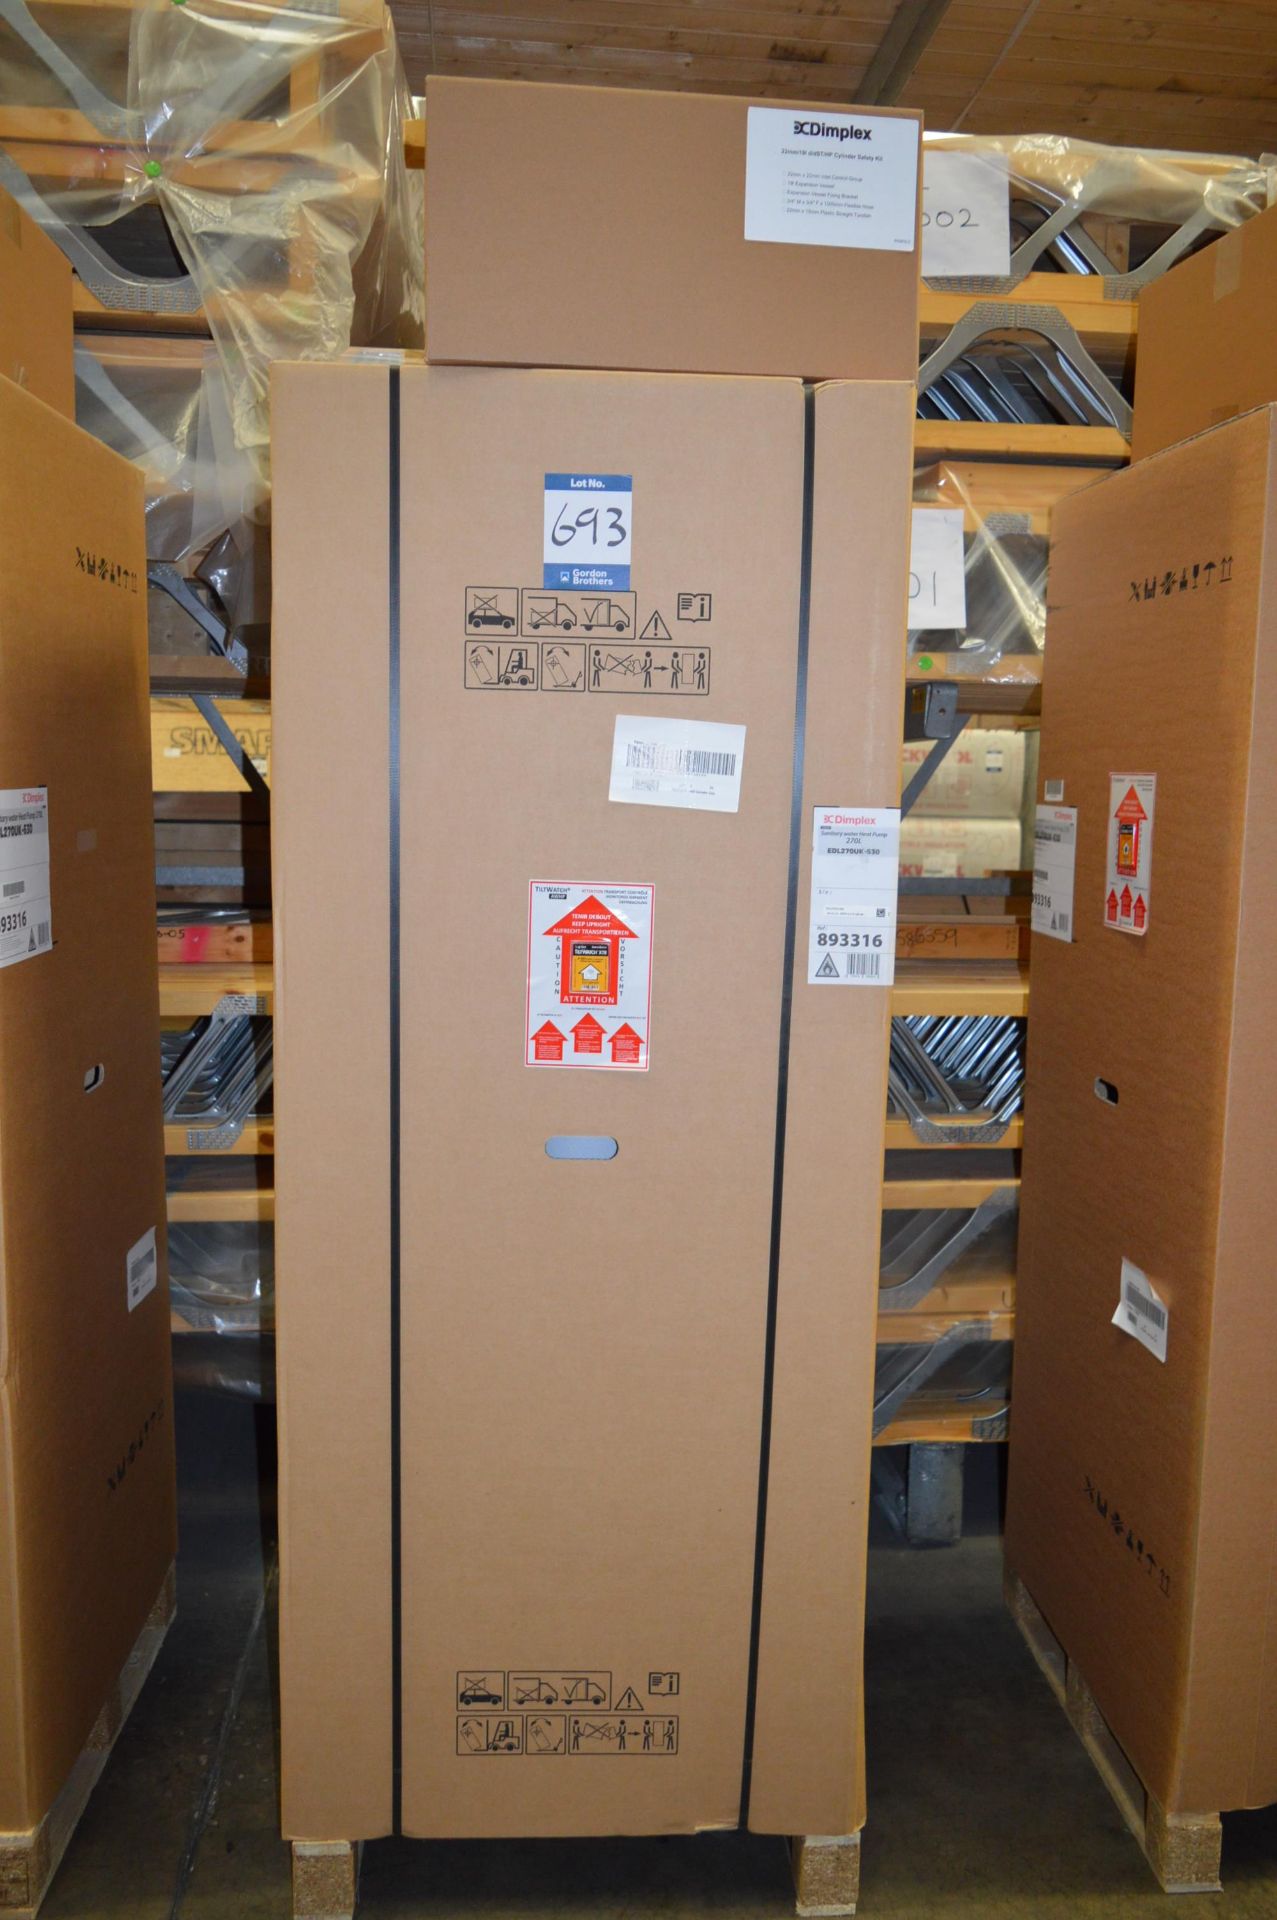 Dimplex, sanitary water heat pump, 270L, Model EDL270UK-630, Serial No. 893316-215120158 (packaged)